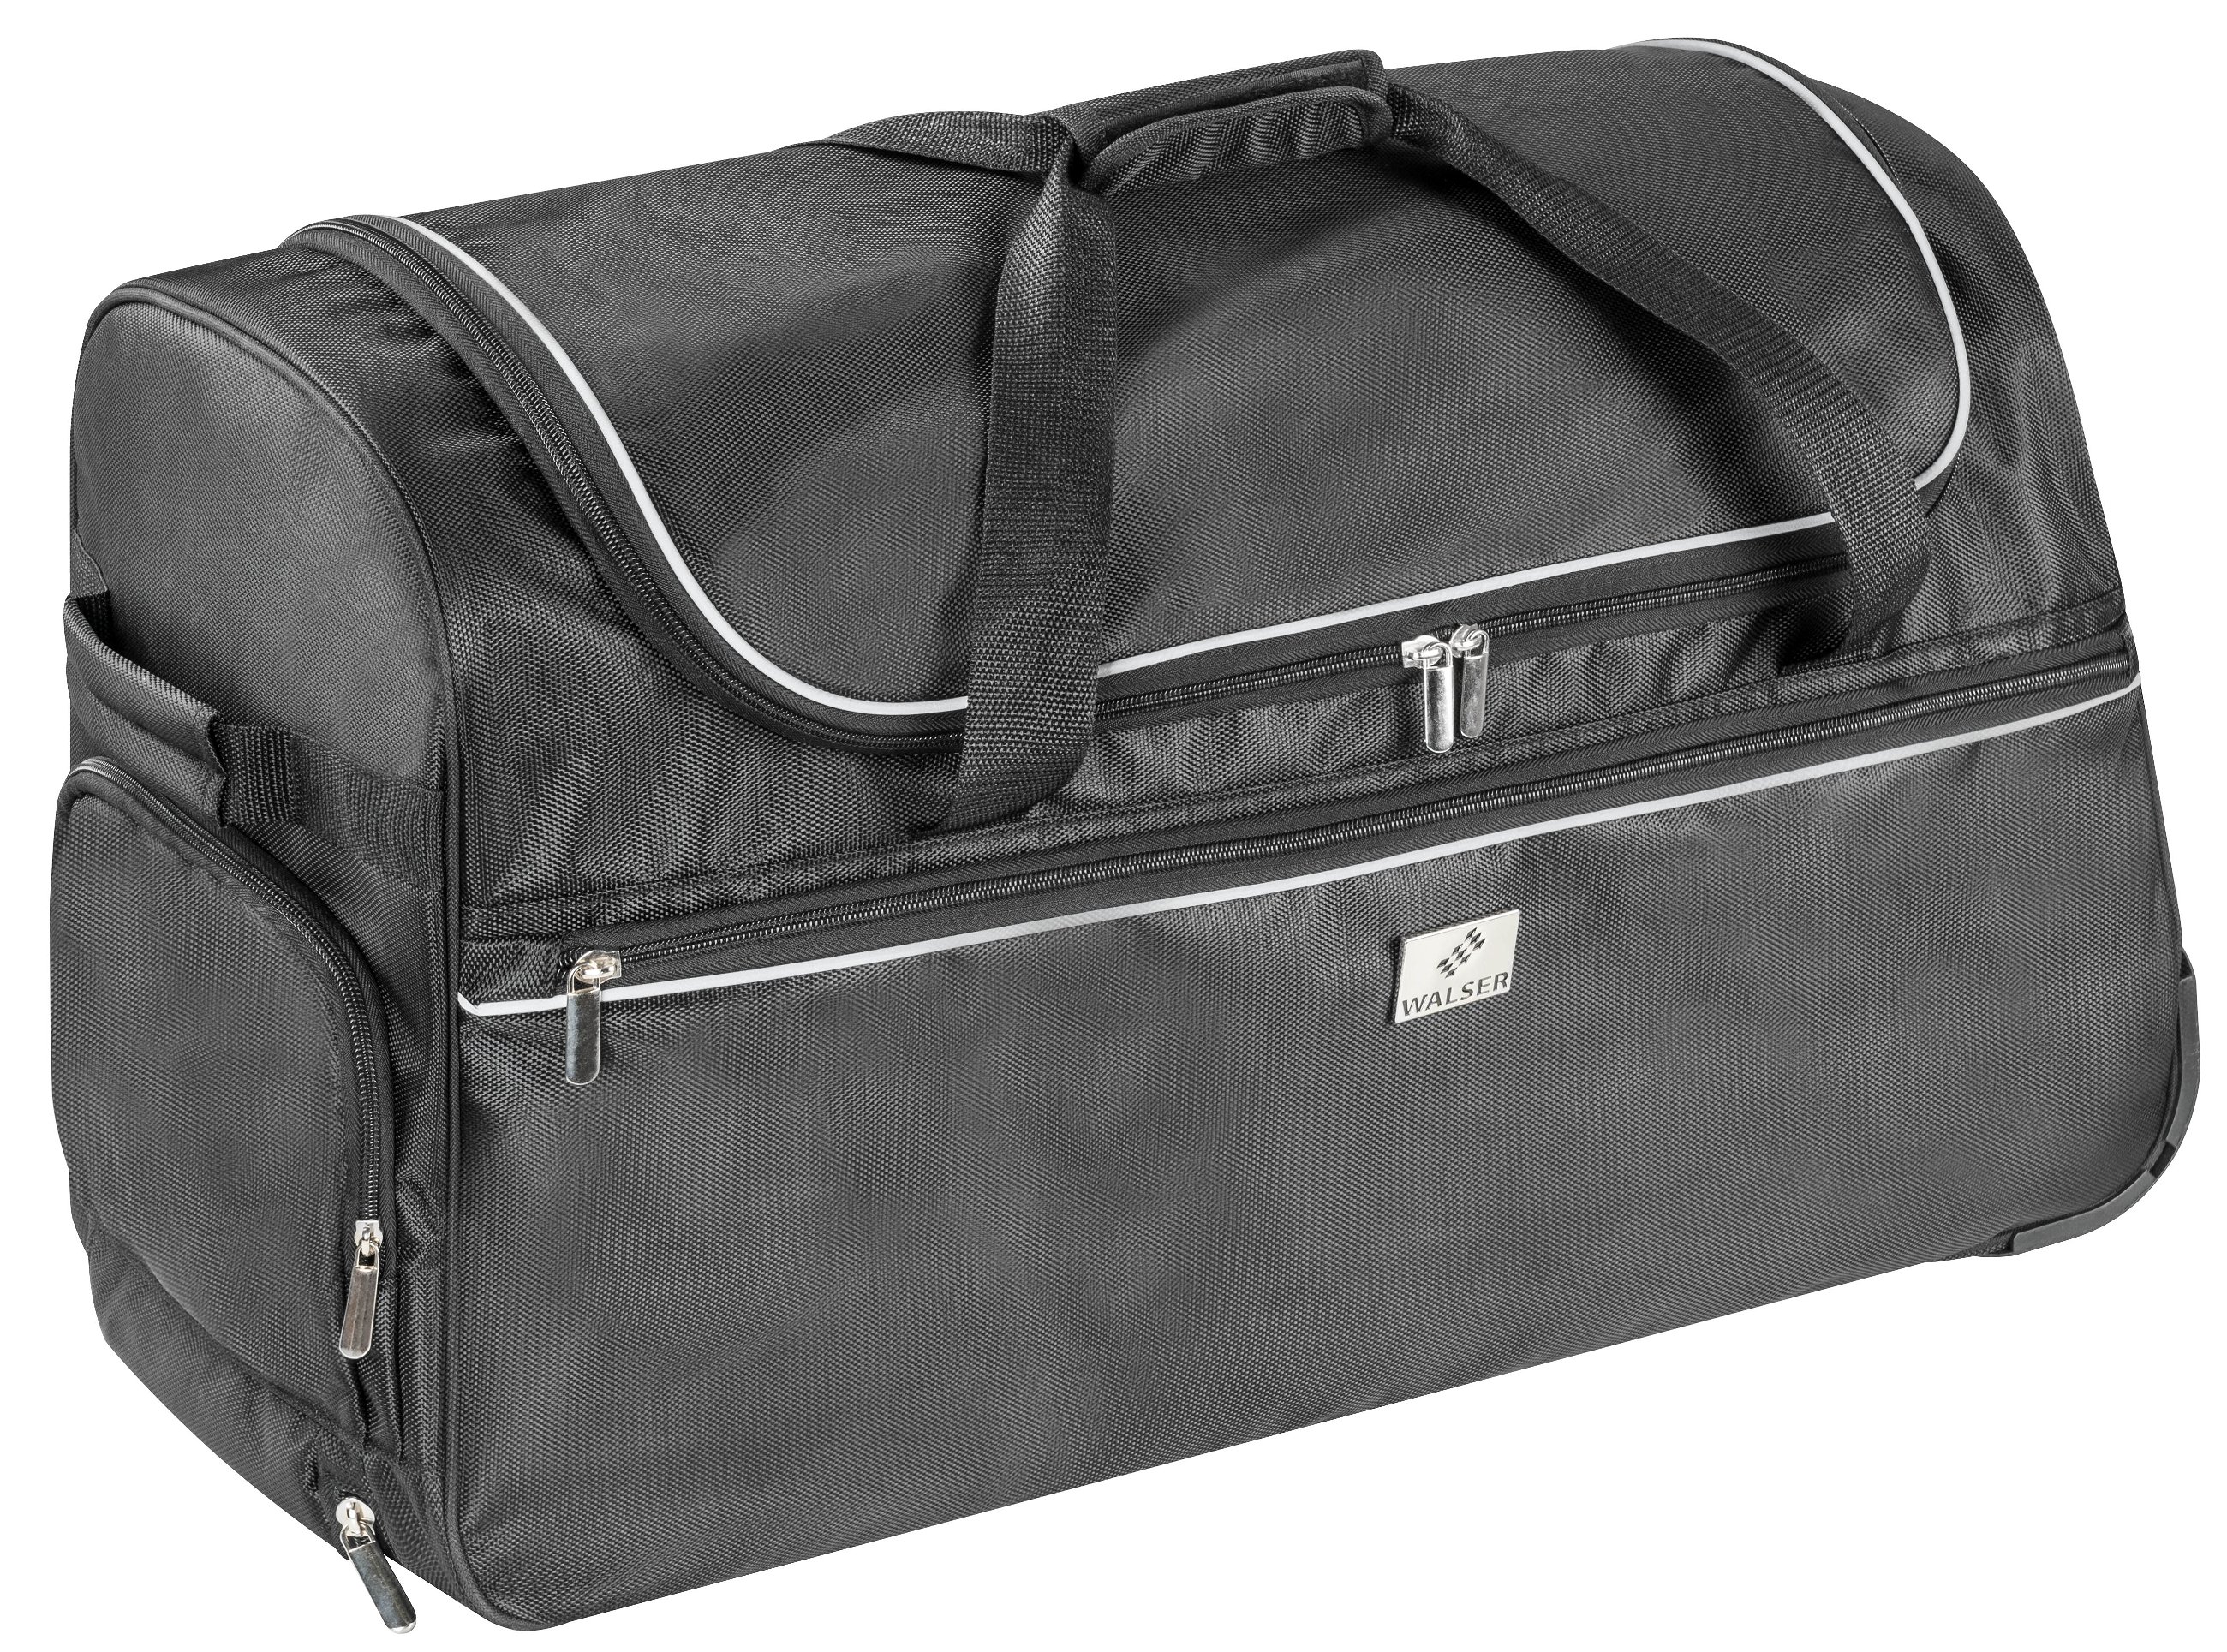 Carbags Trolley Bag, Reisetasche, Reisetrolley 100L - 60x35x40 cm